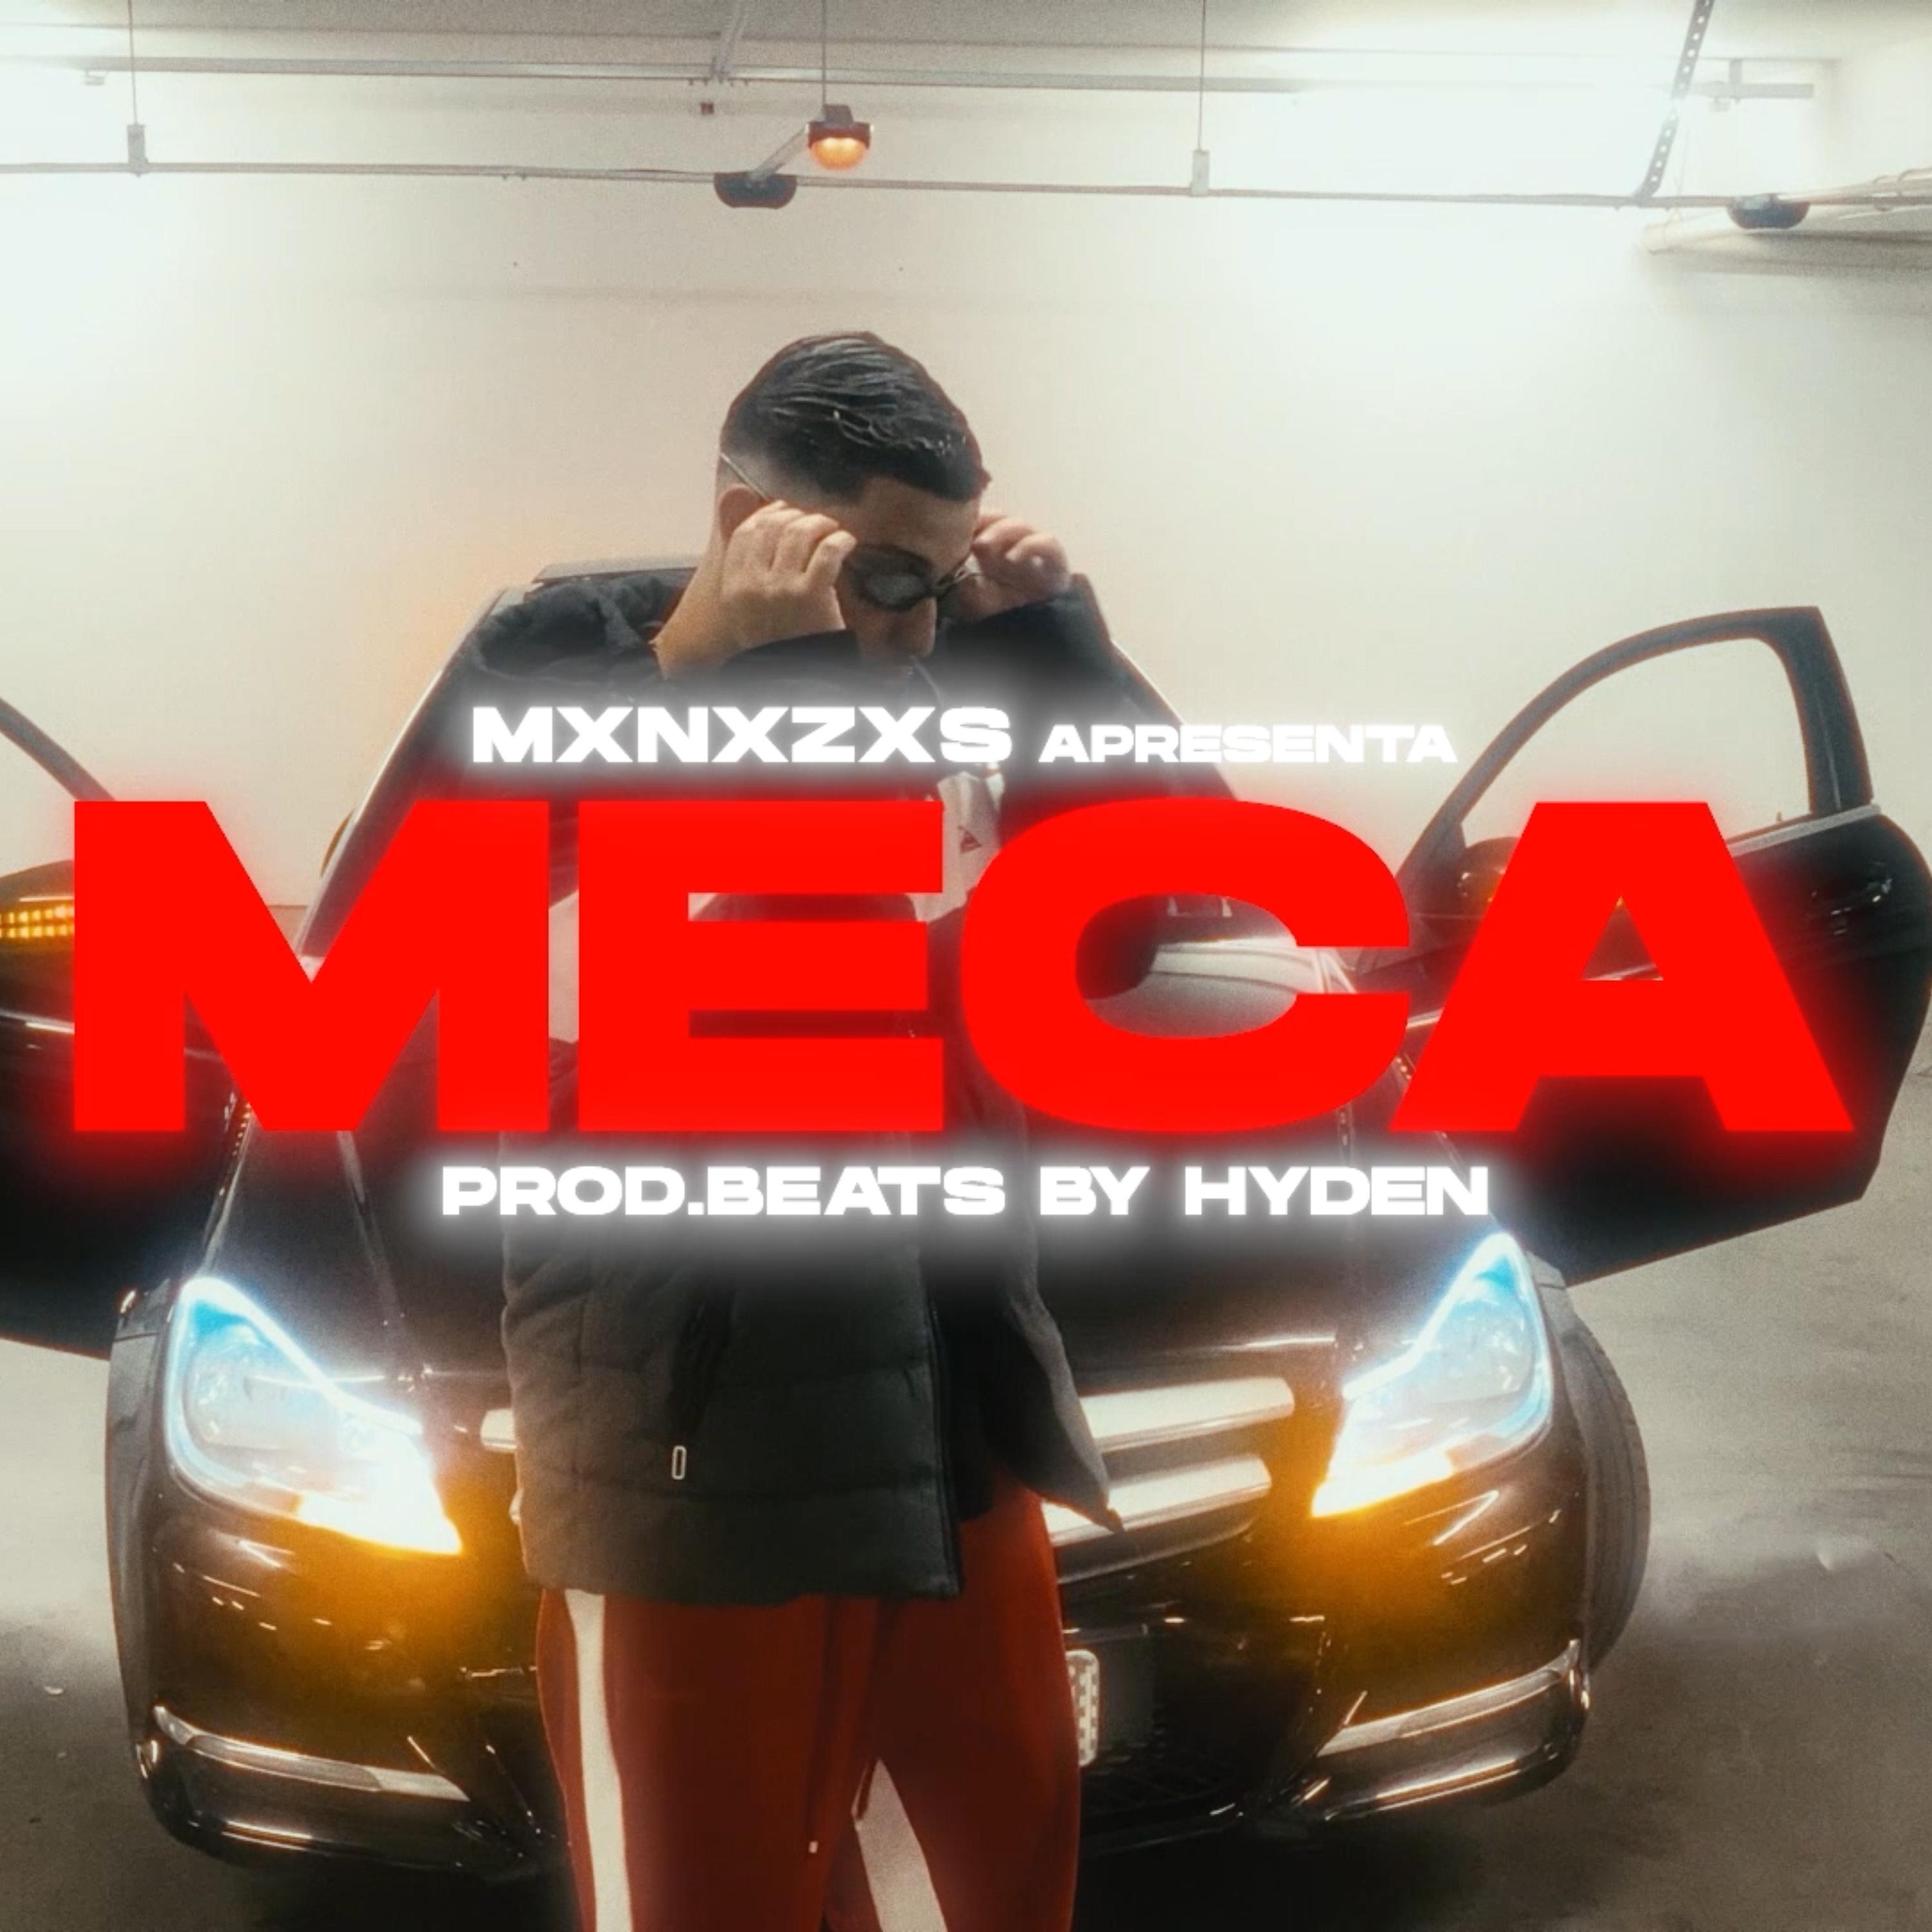 Постер альбома Meca